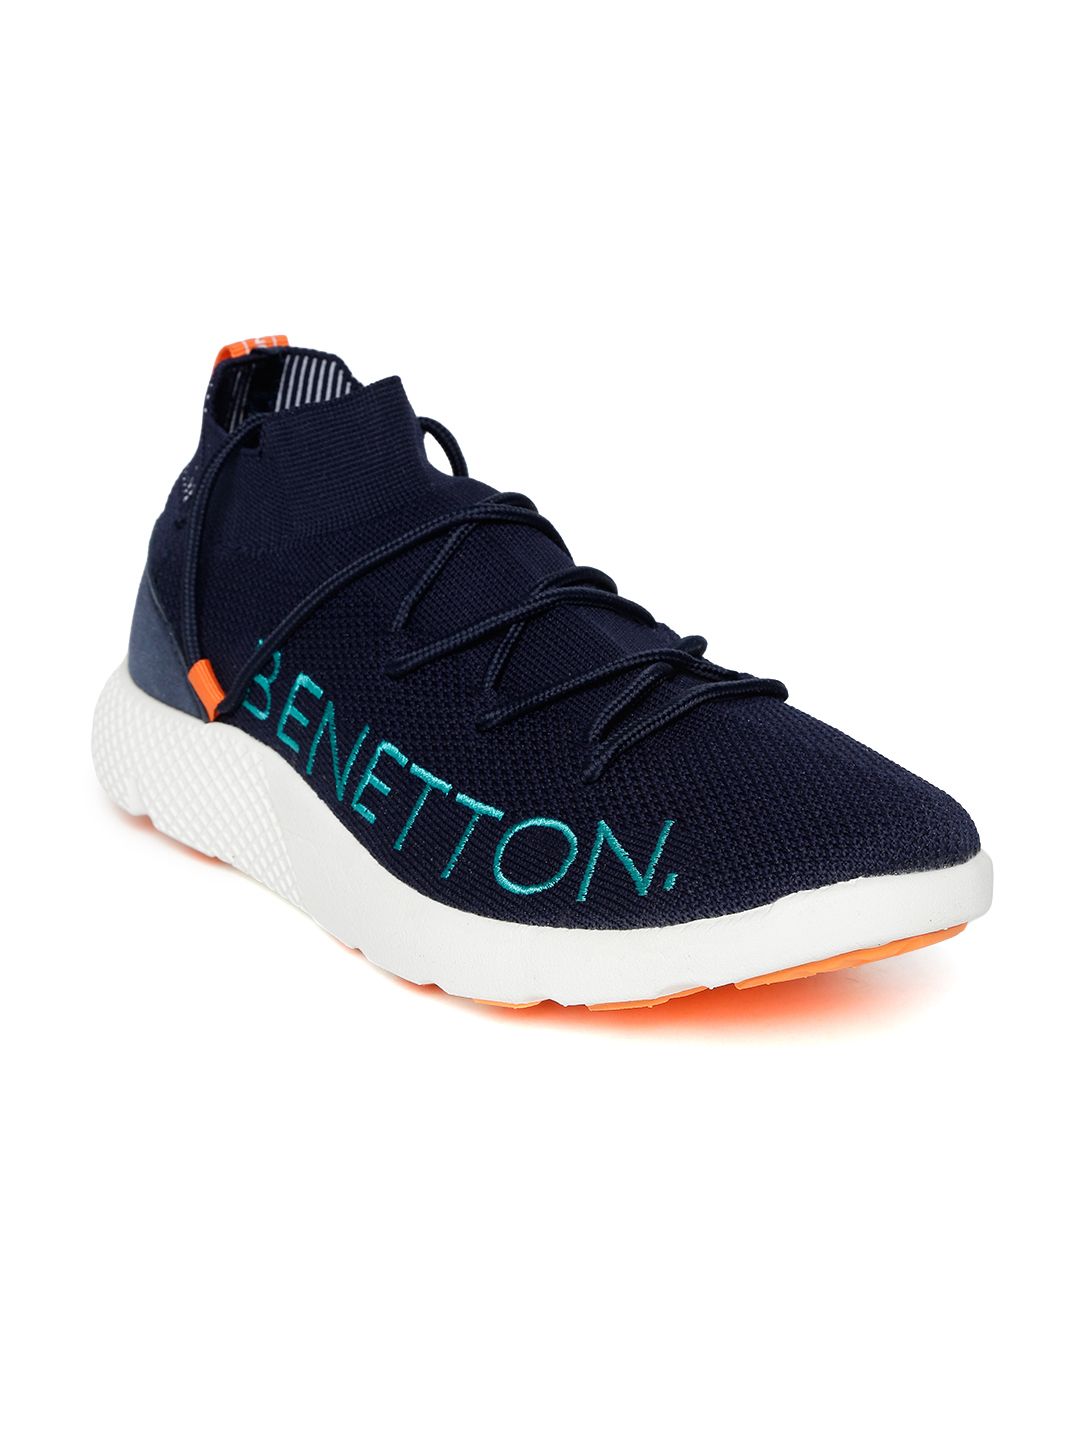 united colors of benetton men navy blue sneakers